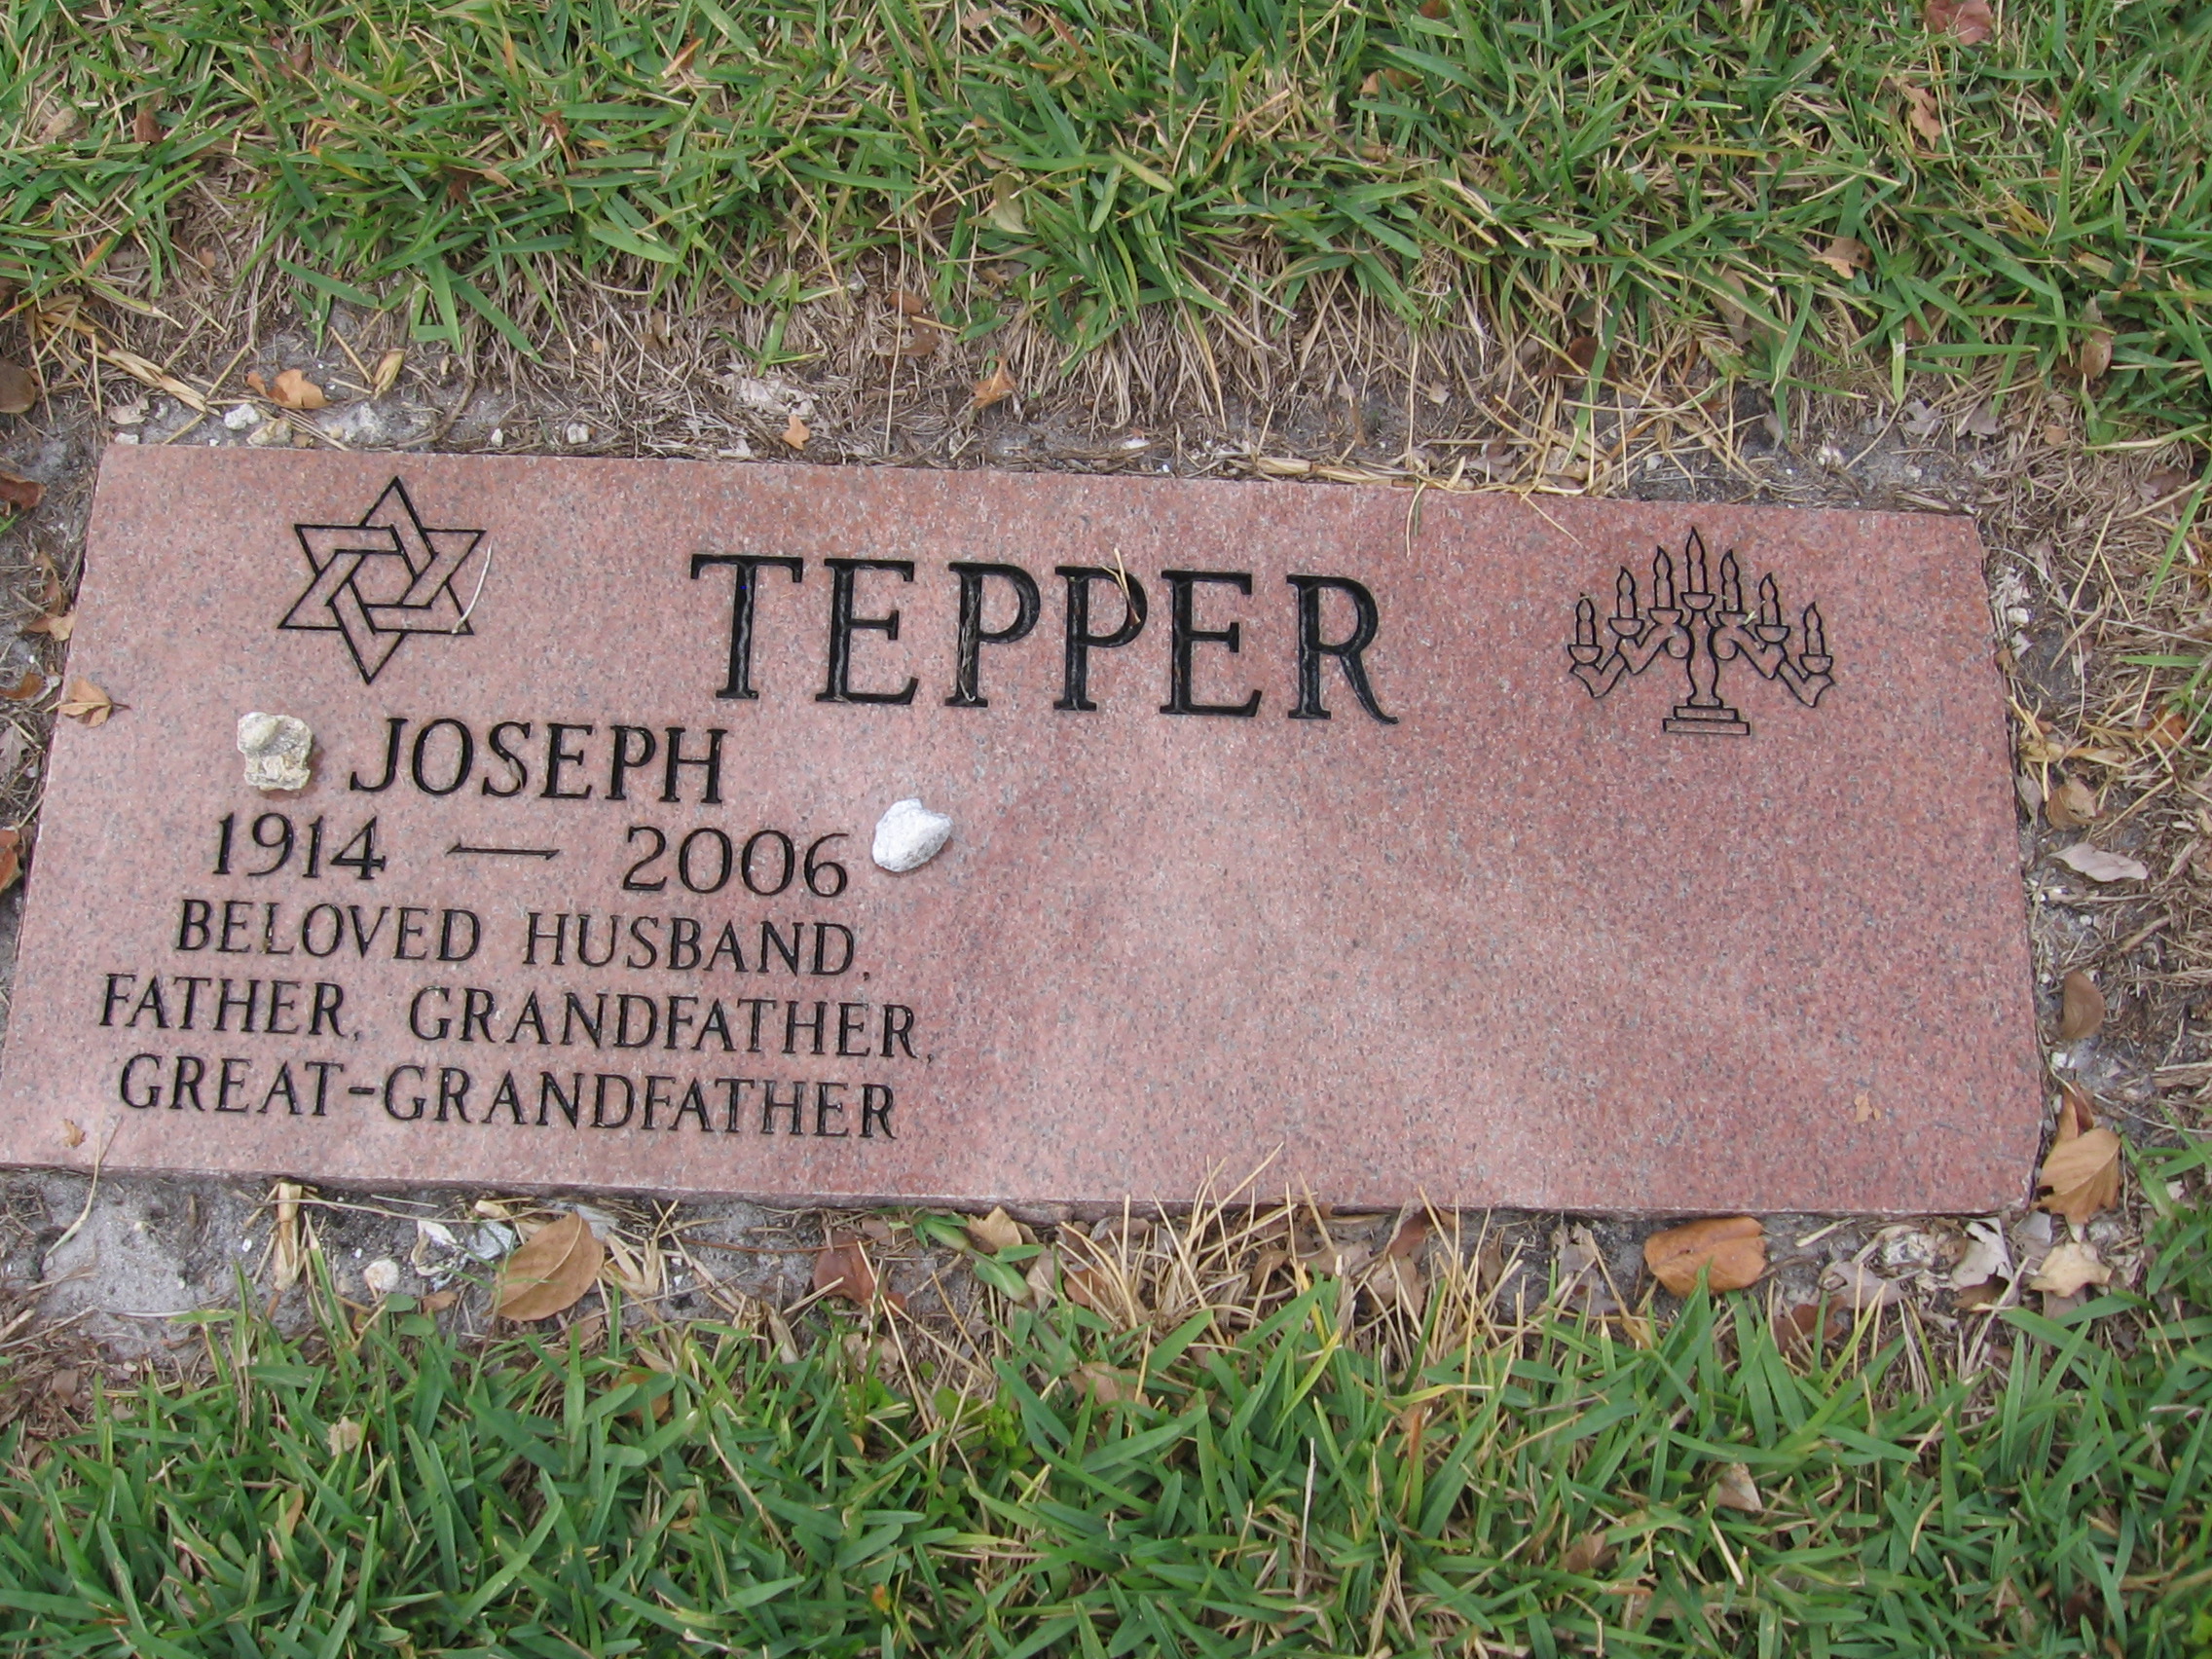 Joseph Tepper